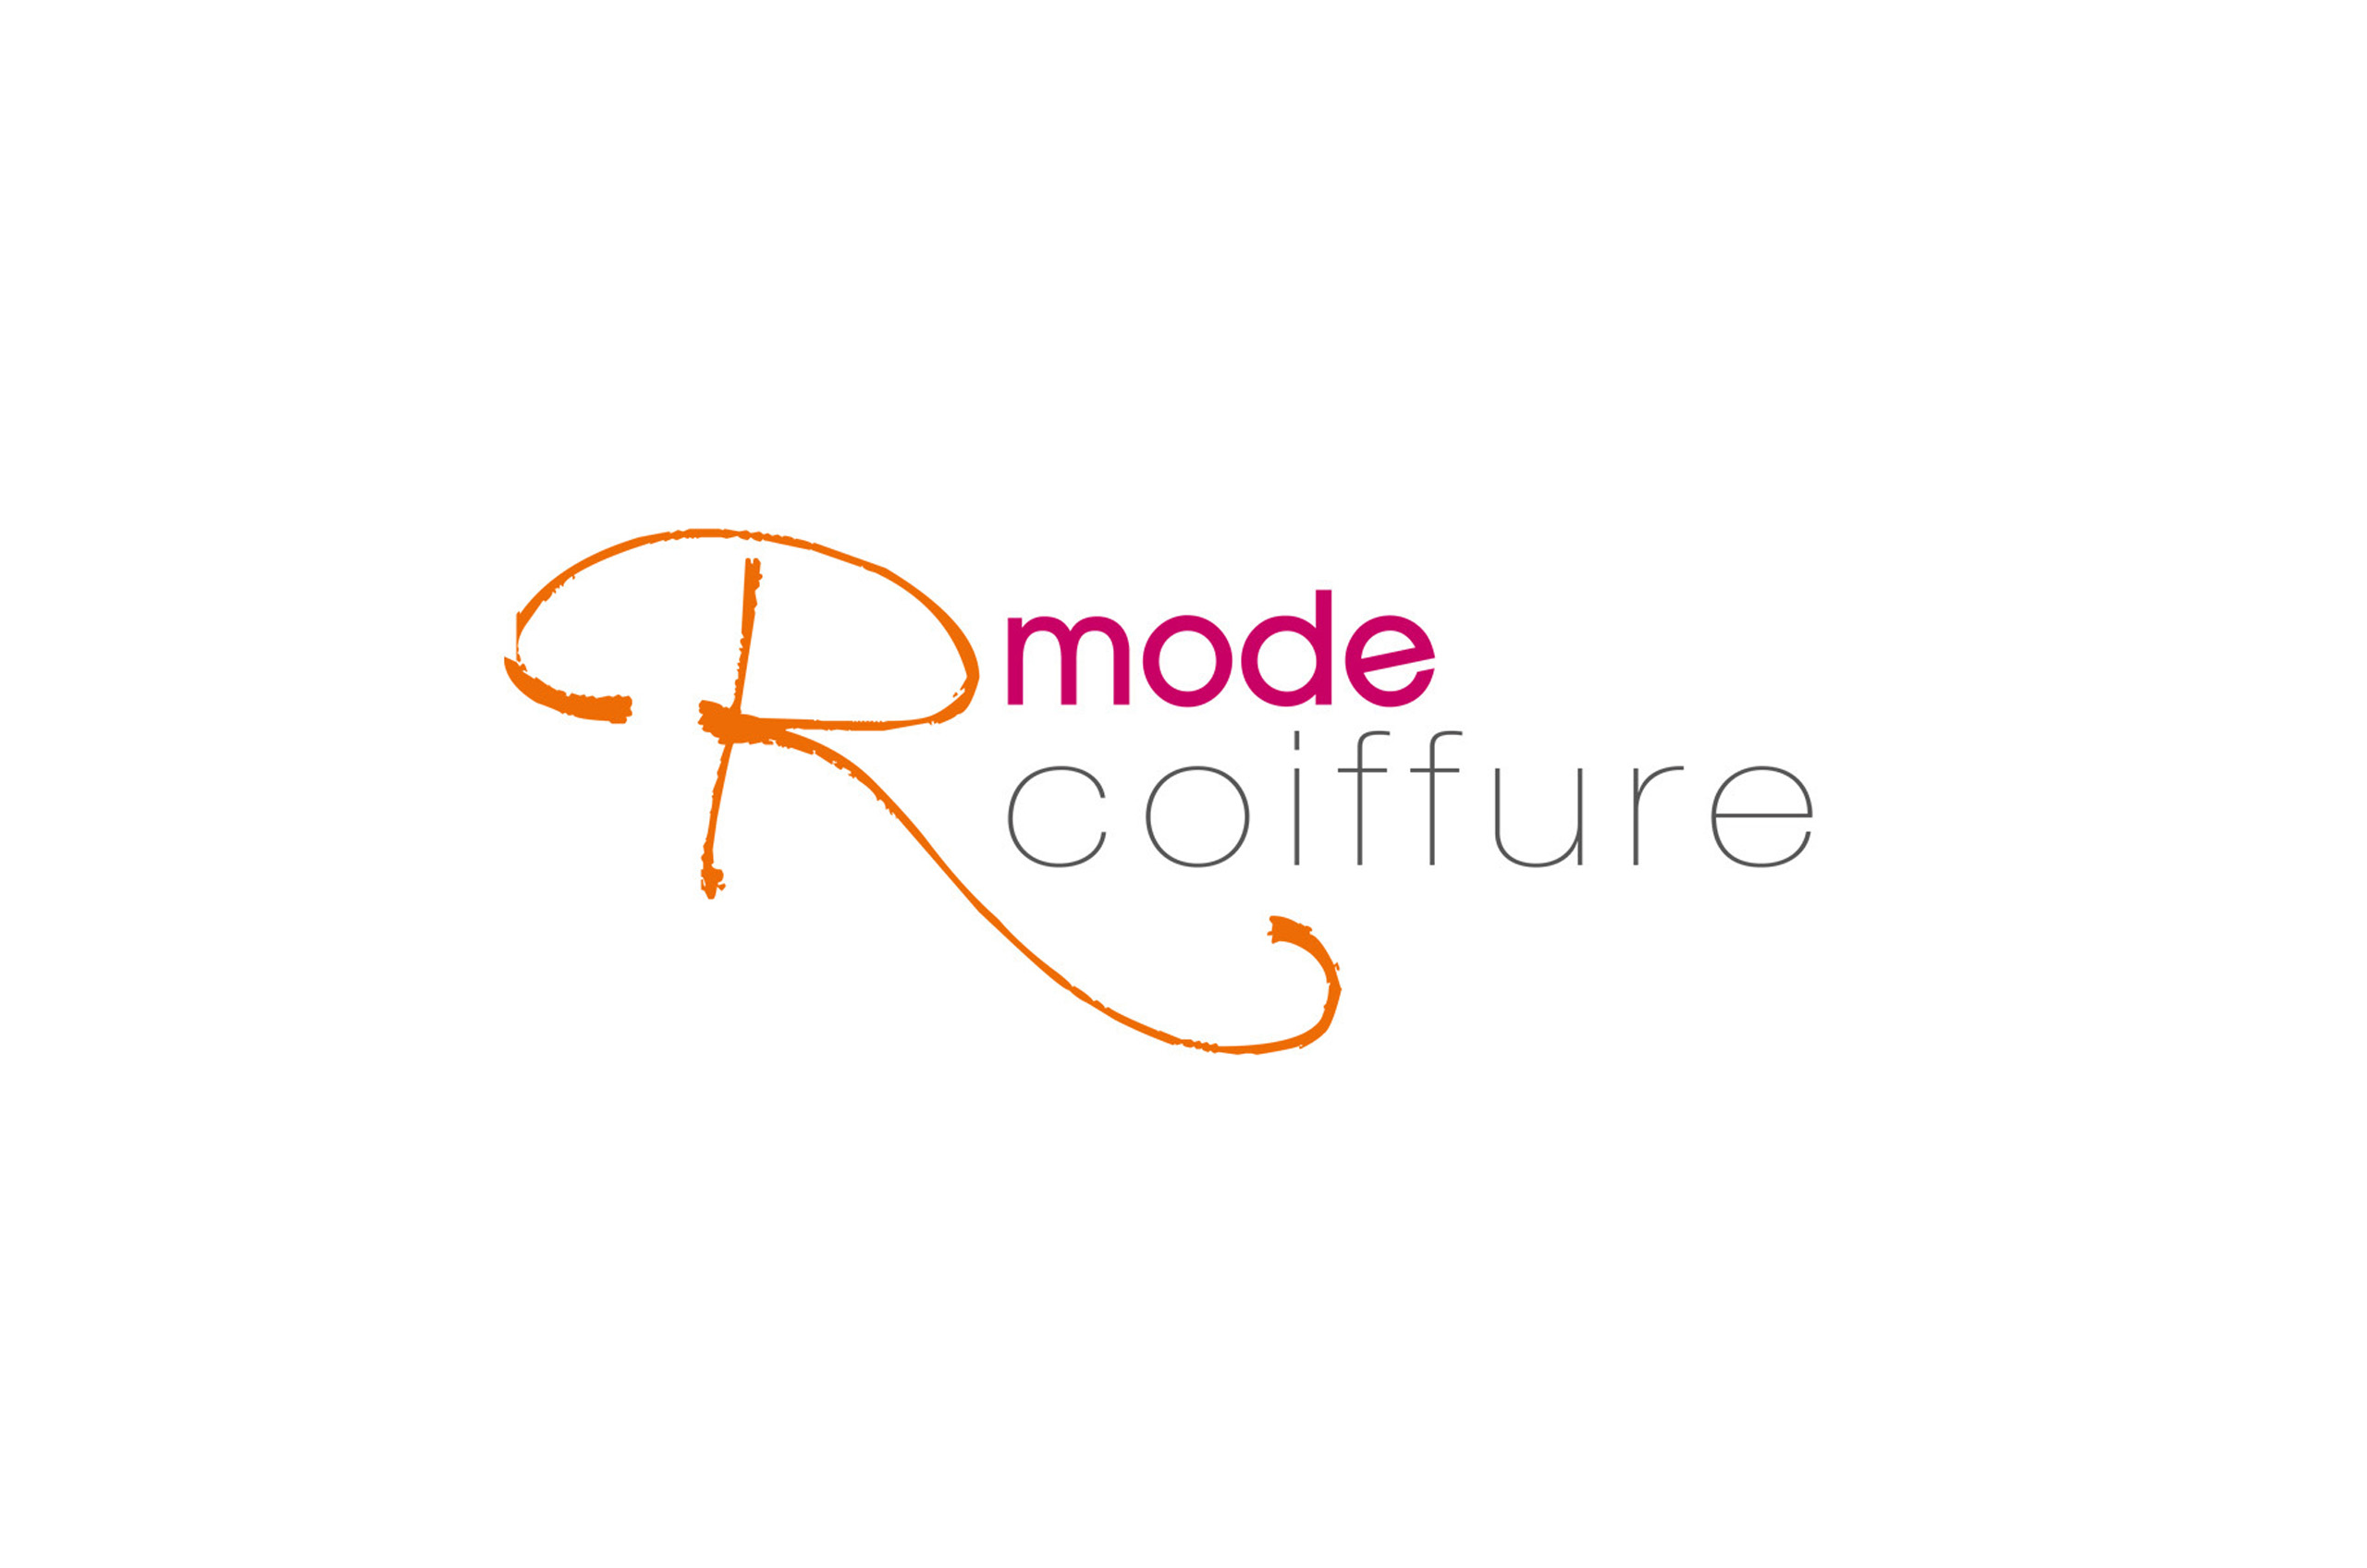 Rmode_logo_fond_blanc_entree_accueil